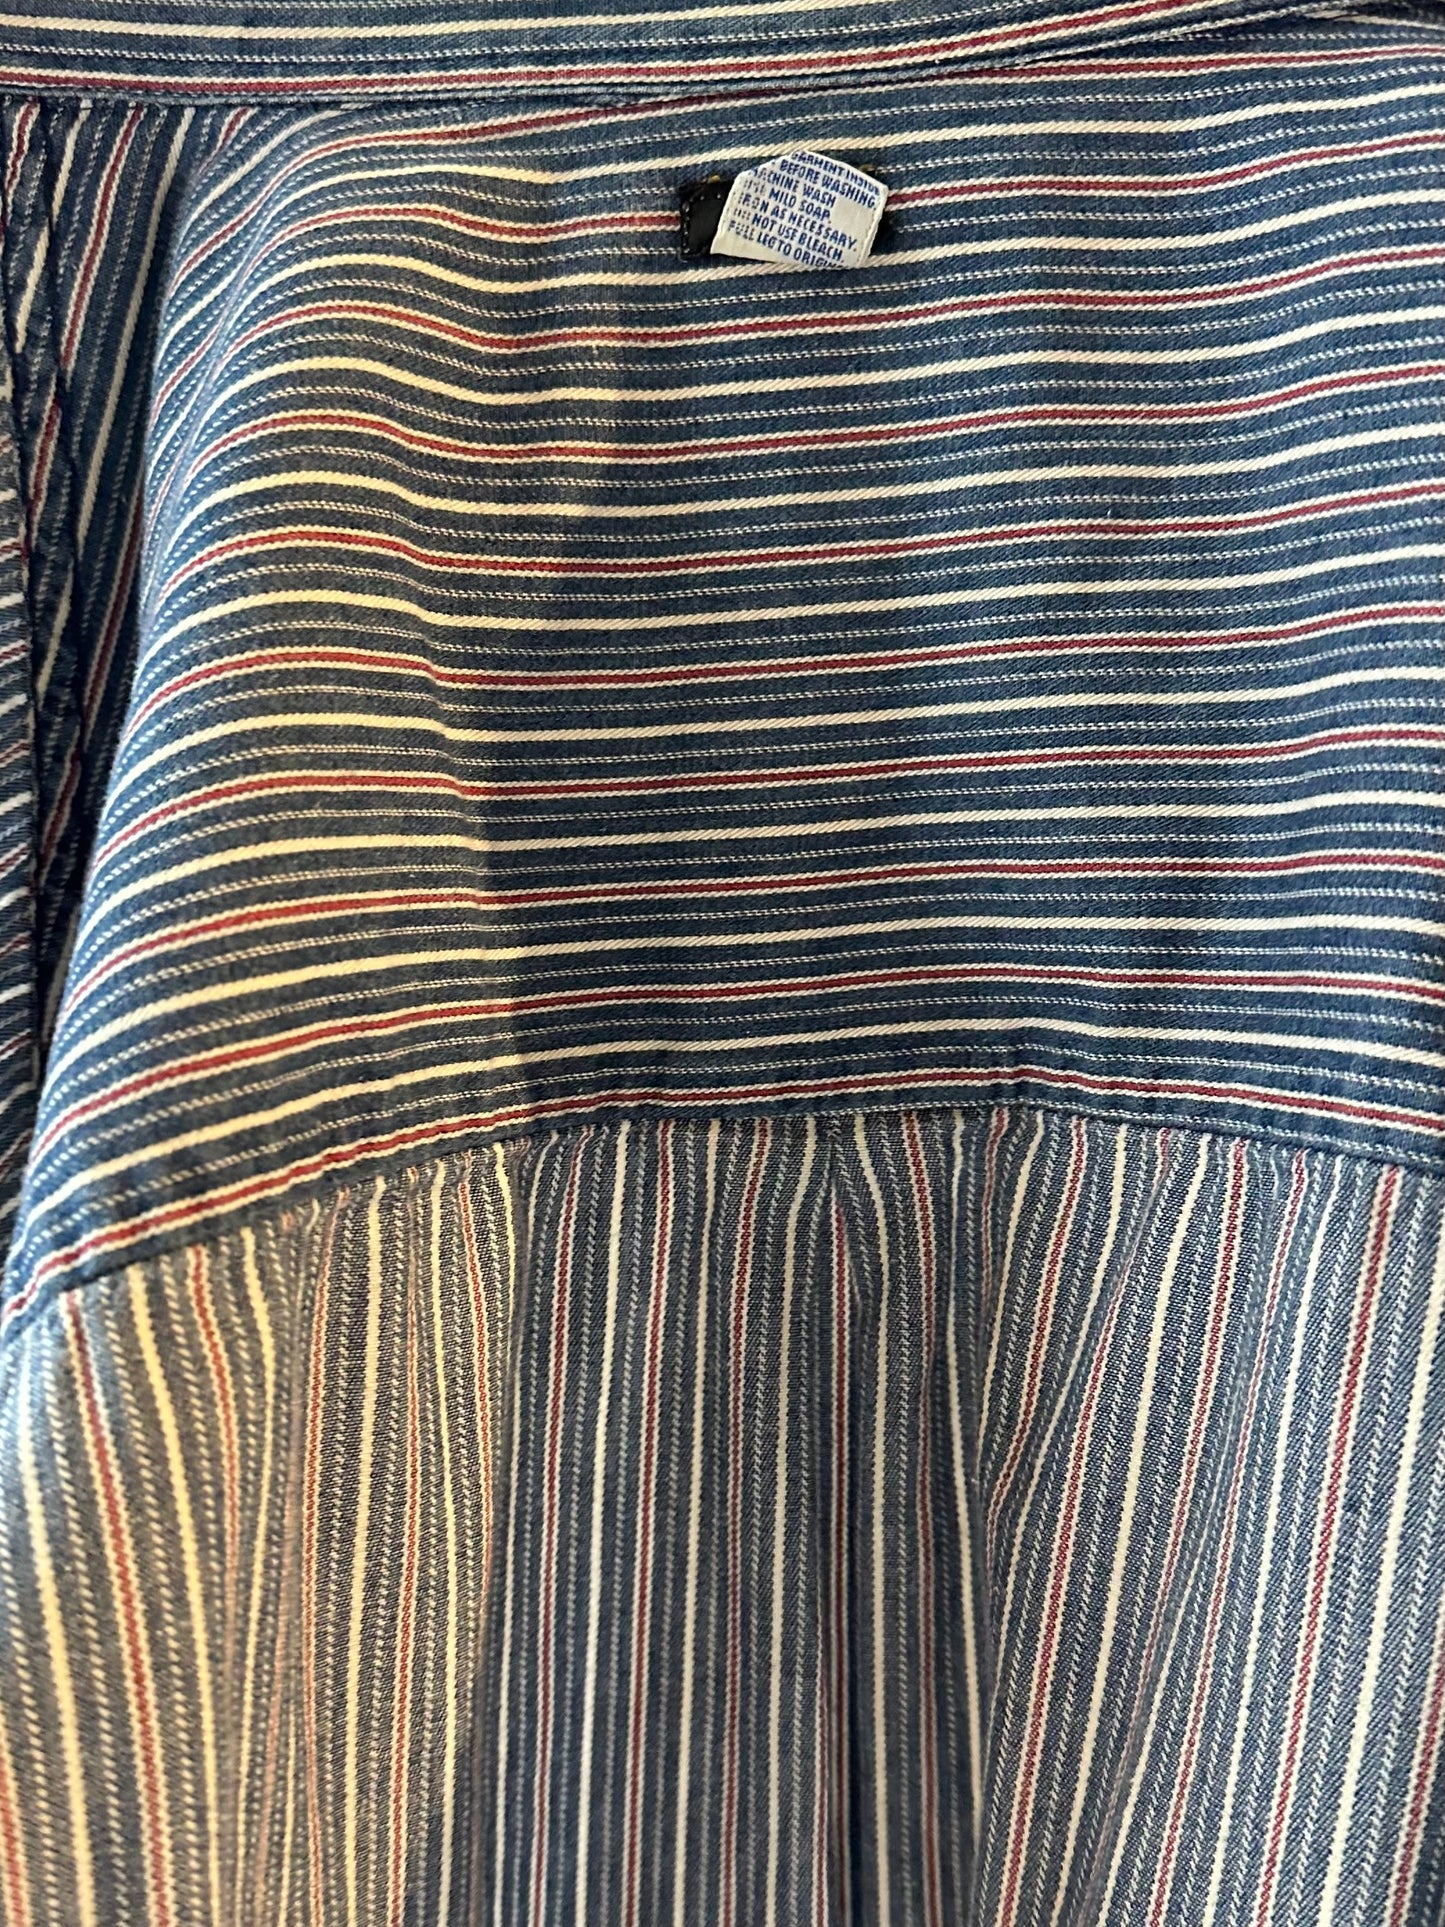 90s 'Lee' Striped Cotton Denim Shirt / Large